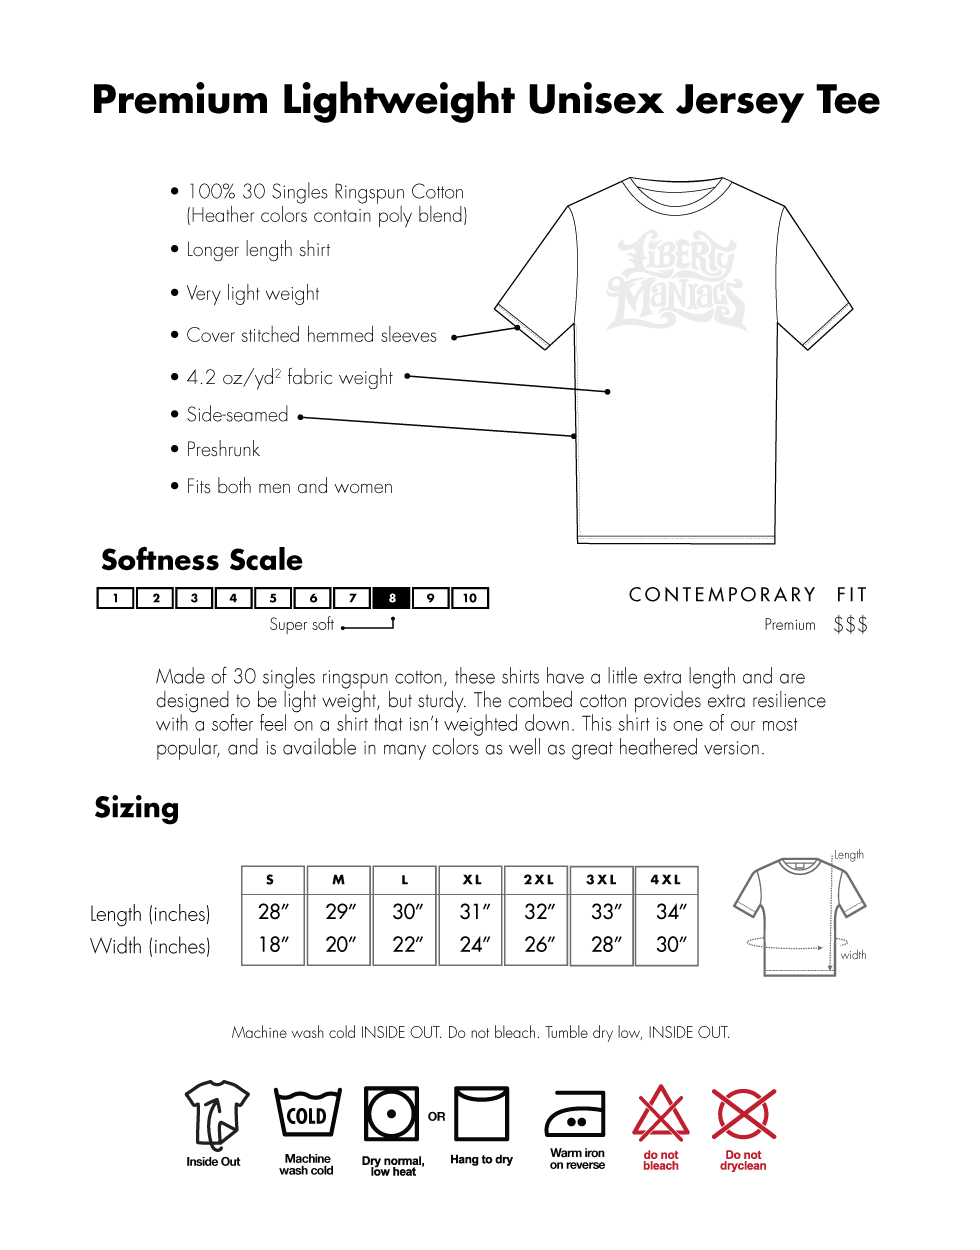 Simple Man T-Shirt